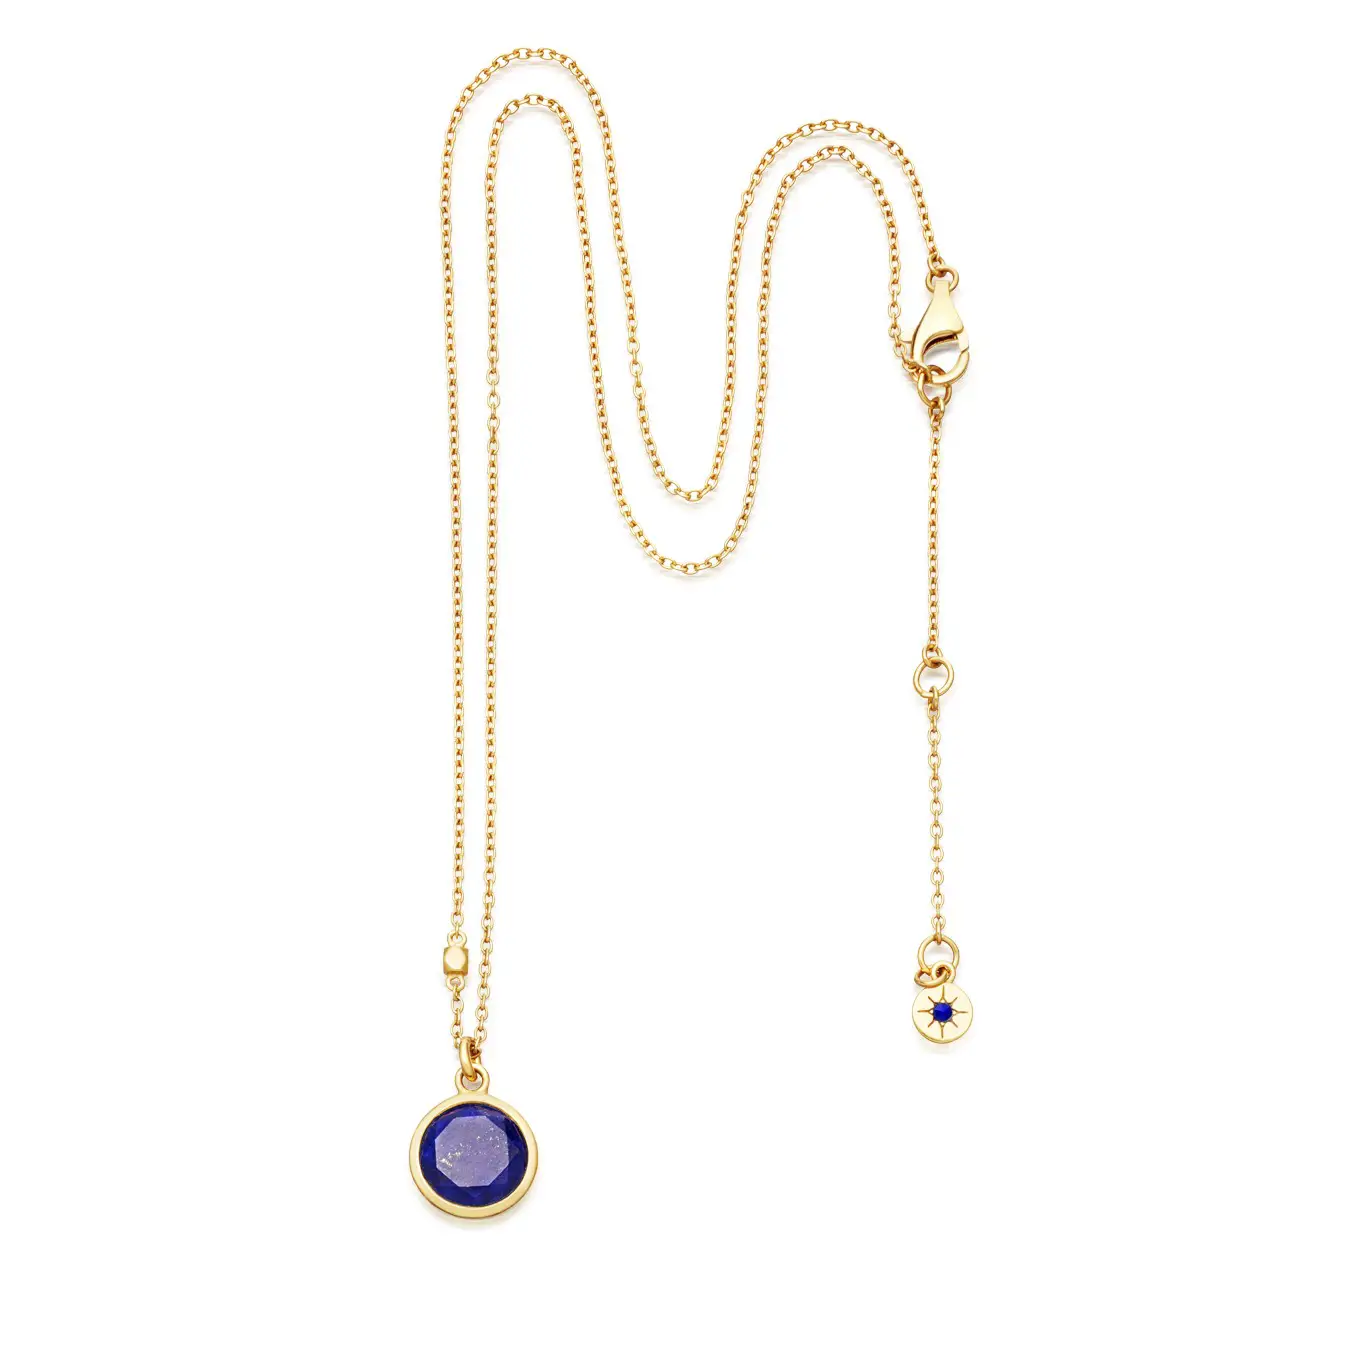 The Duchess of Cambridge wore Astley Clarke Round Stilla Lapis Lazuli Pendant Necklace